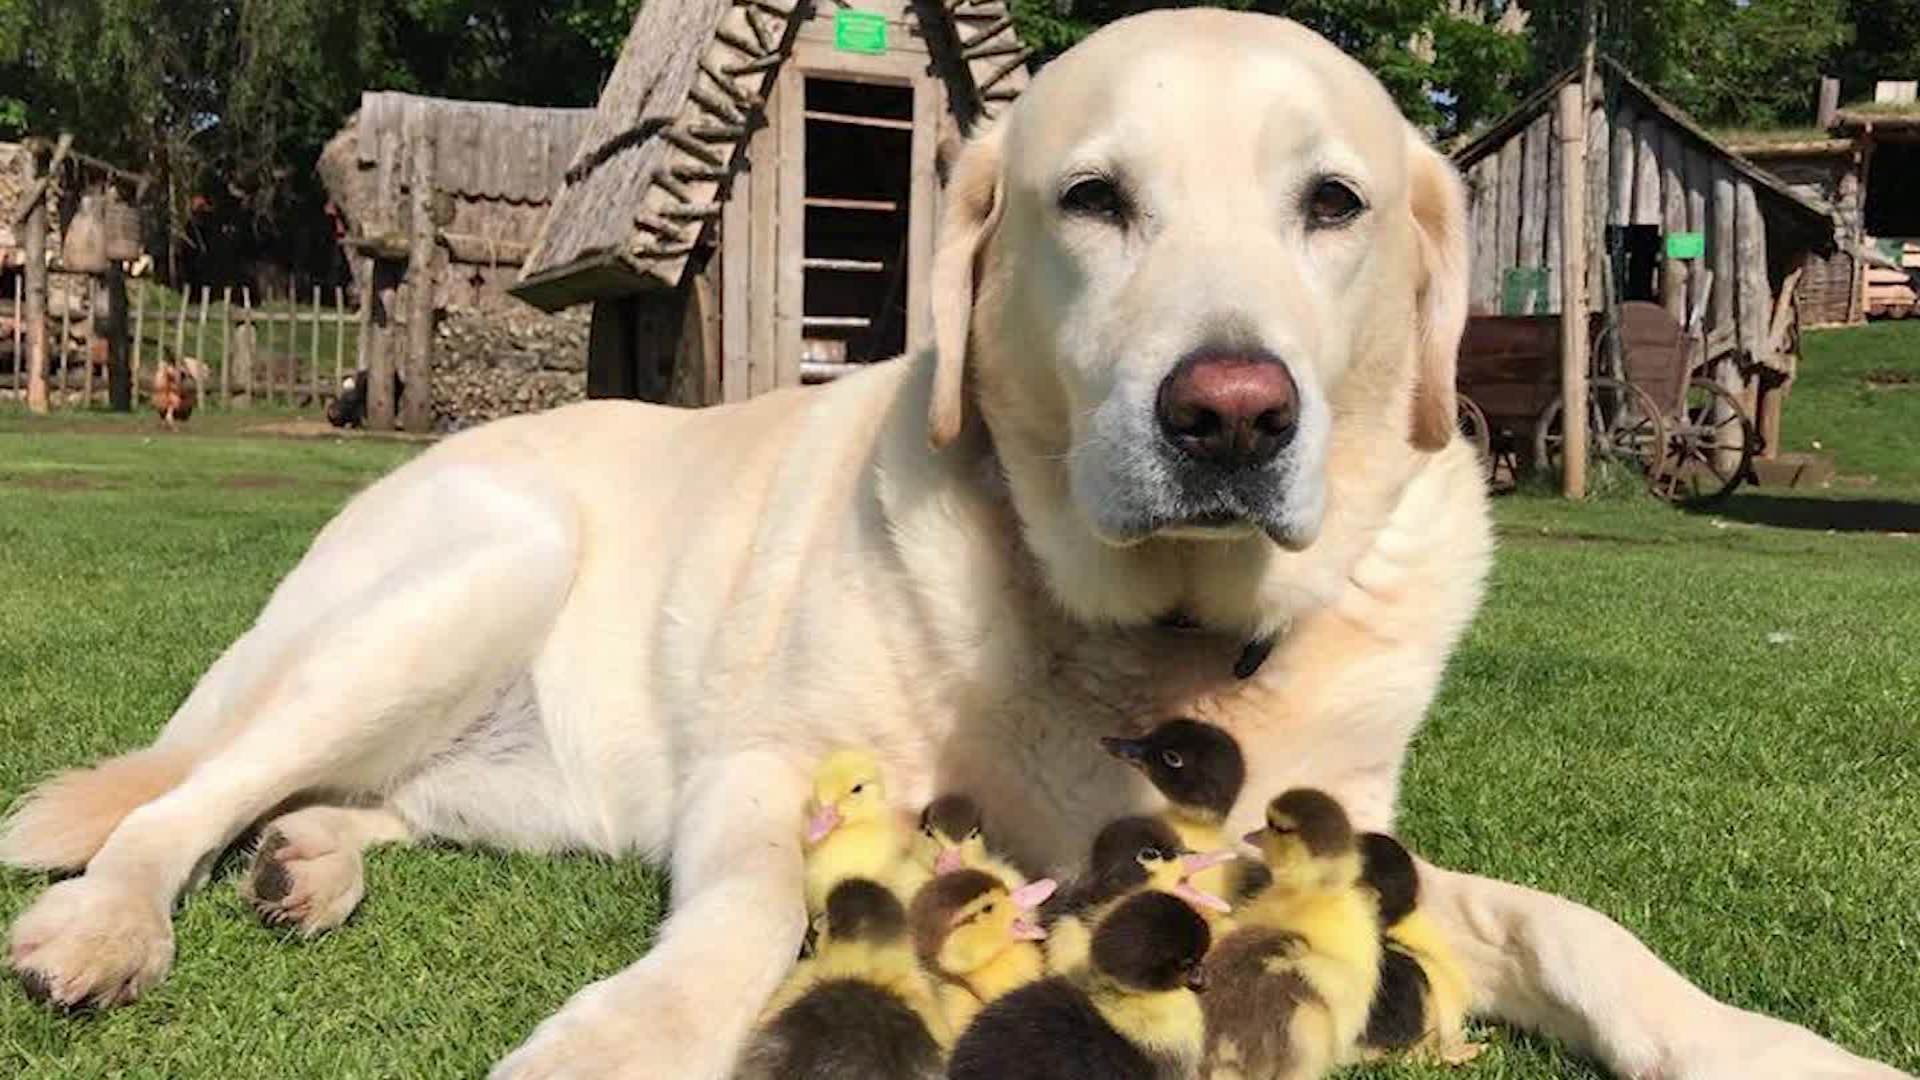 Dog 'adopted' nine ducklings - CNN Video